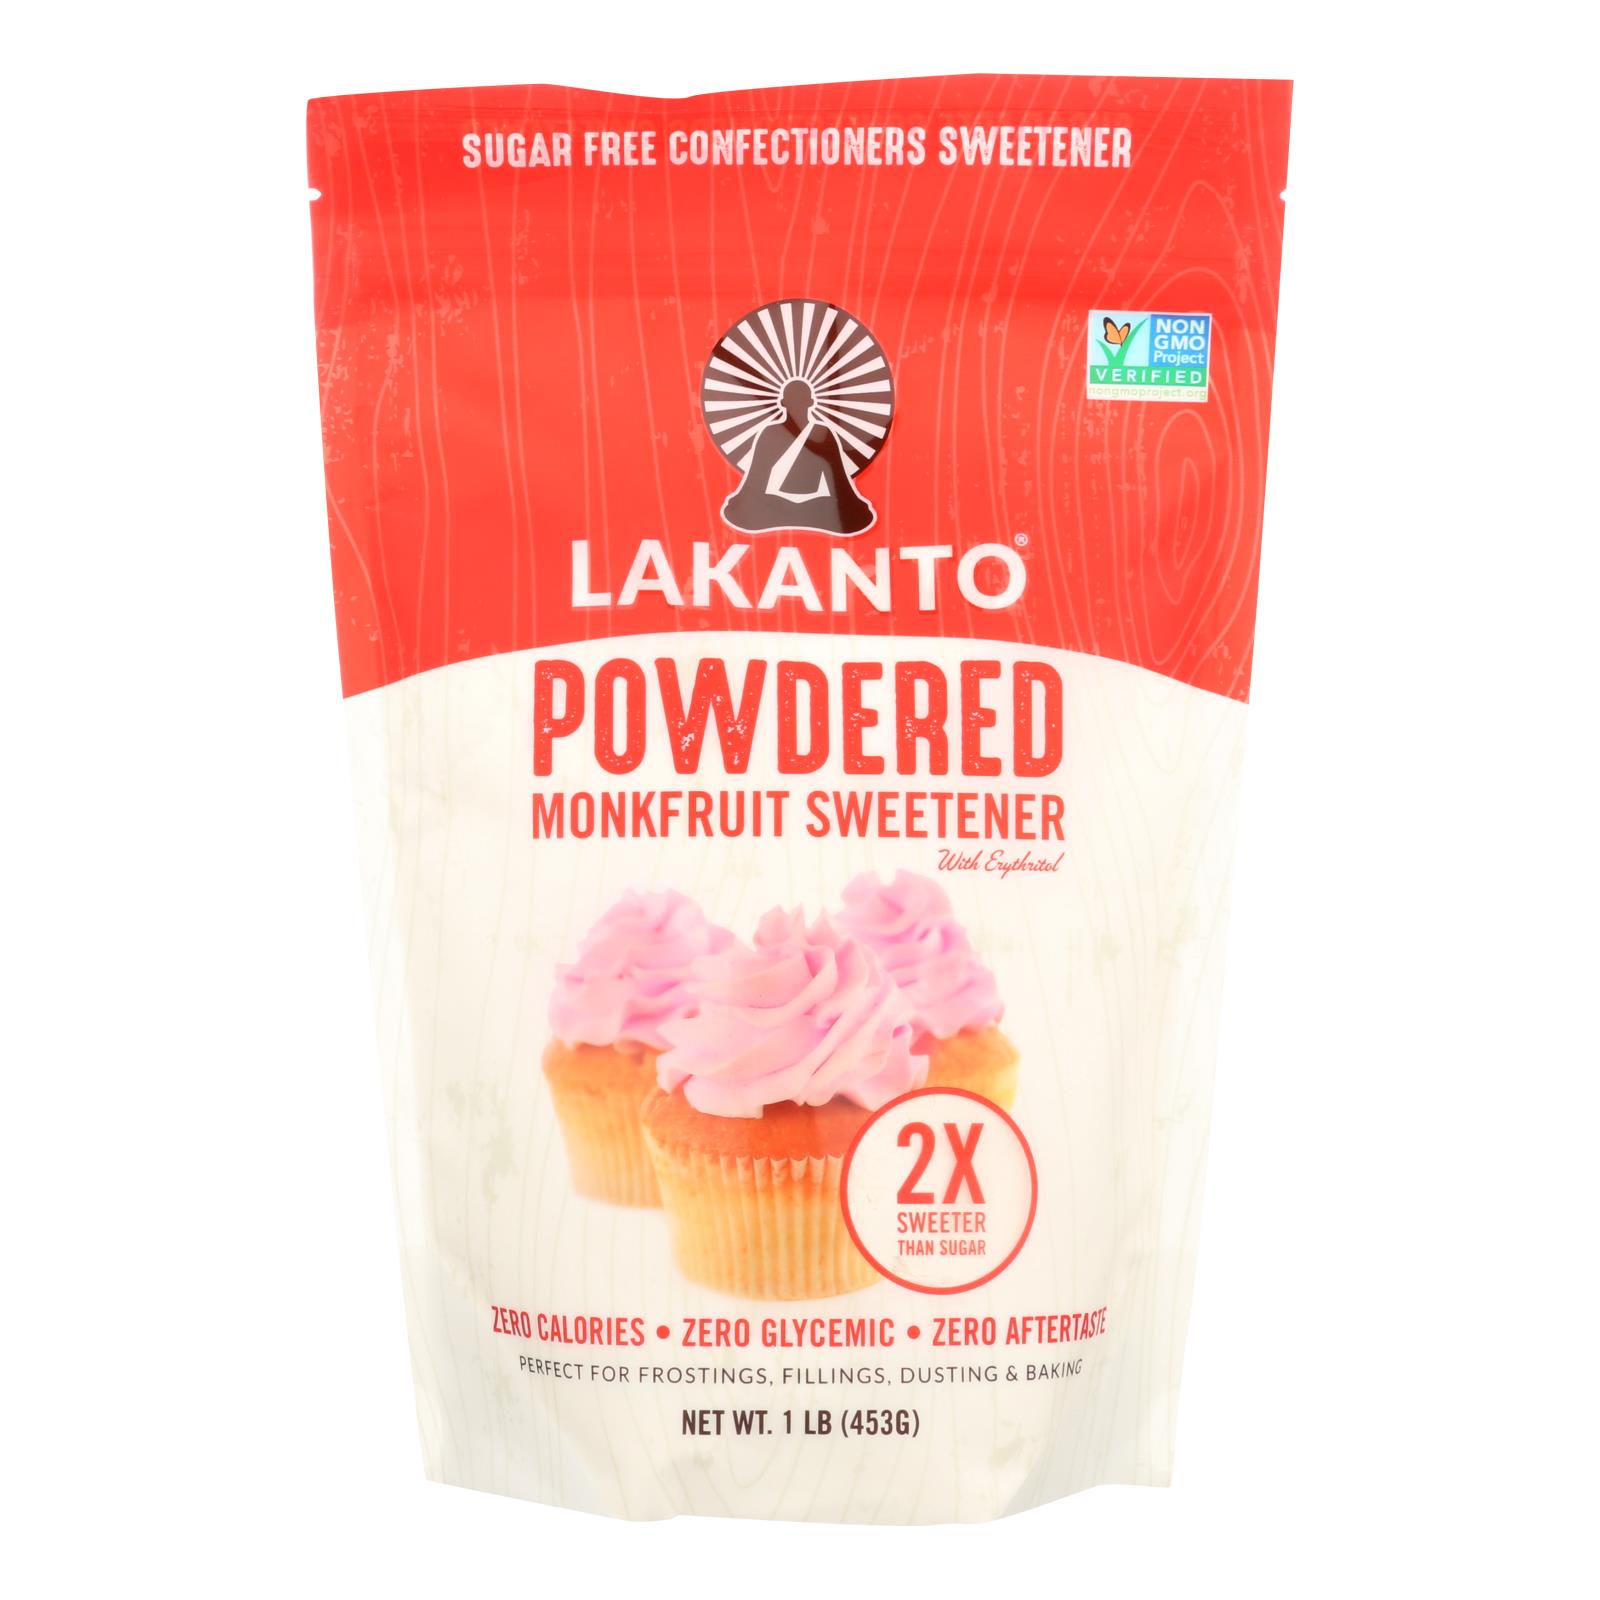 Lakanto Powdered Monkfruit Sweetener With Erythritol - 8개 묶음상품 - 1 LB